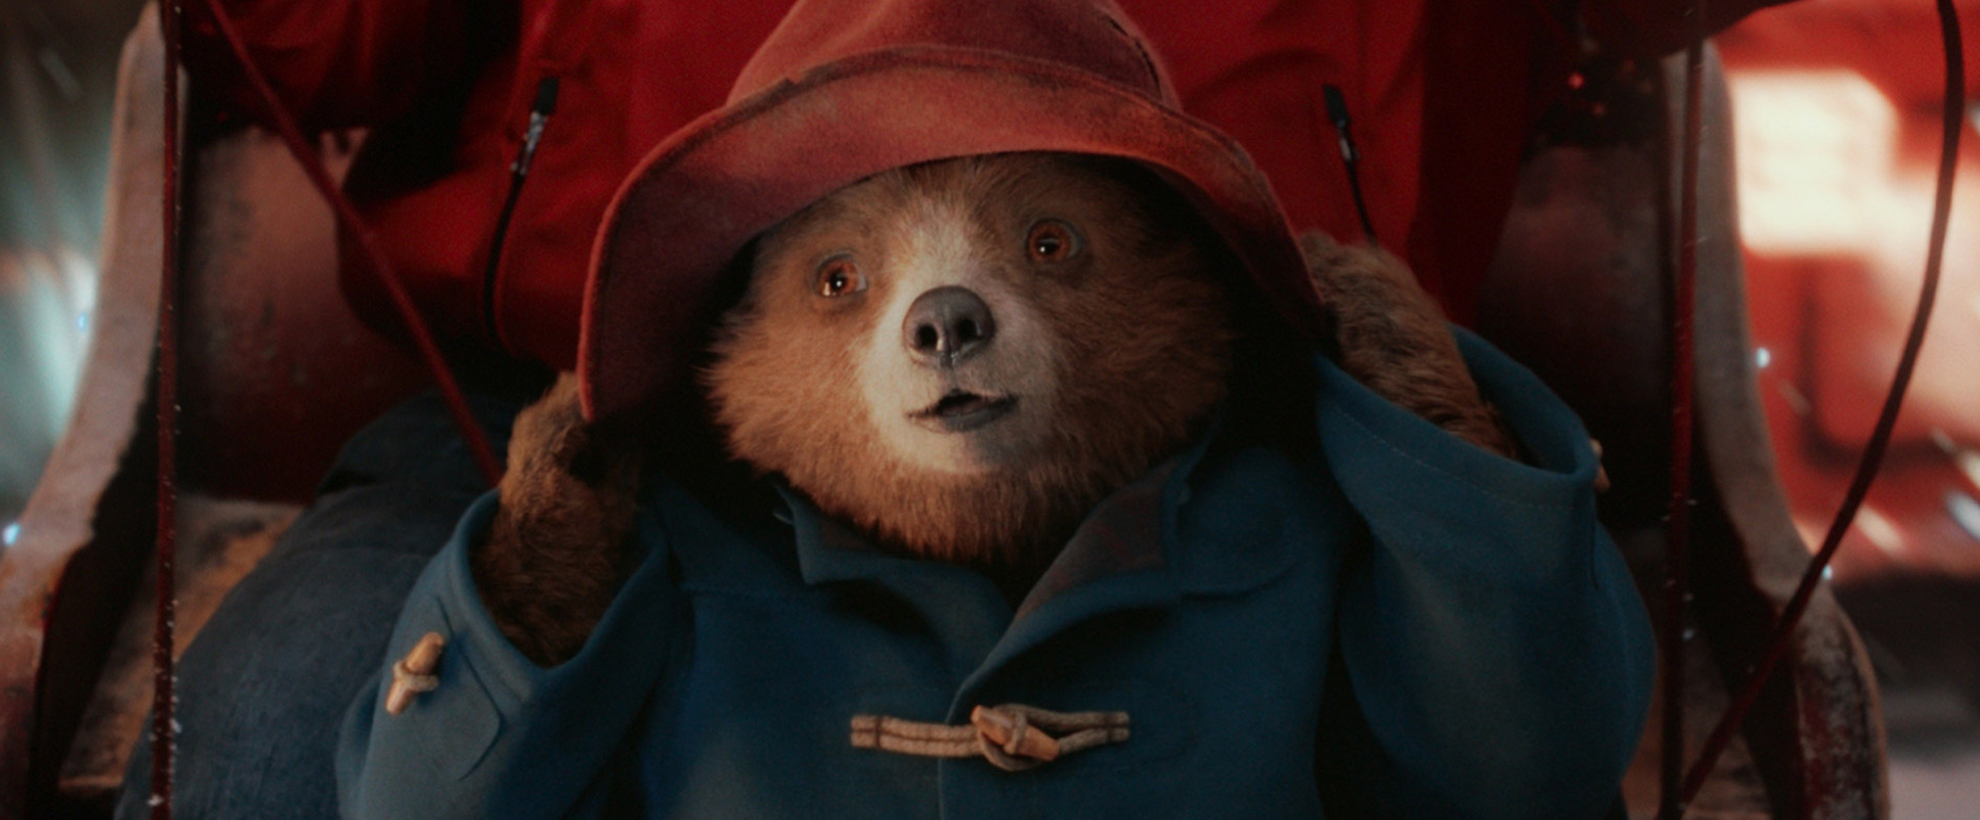 Paddington the bear wearing a red rain hat and blue coat